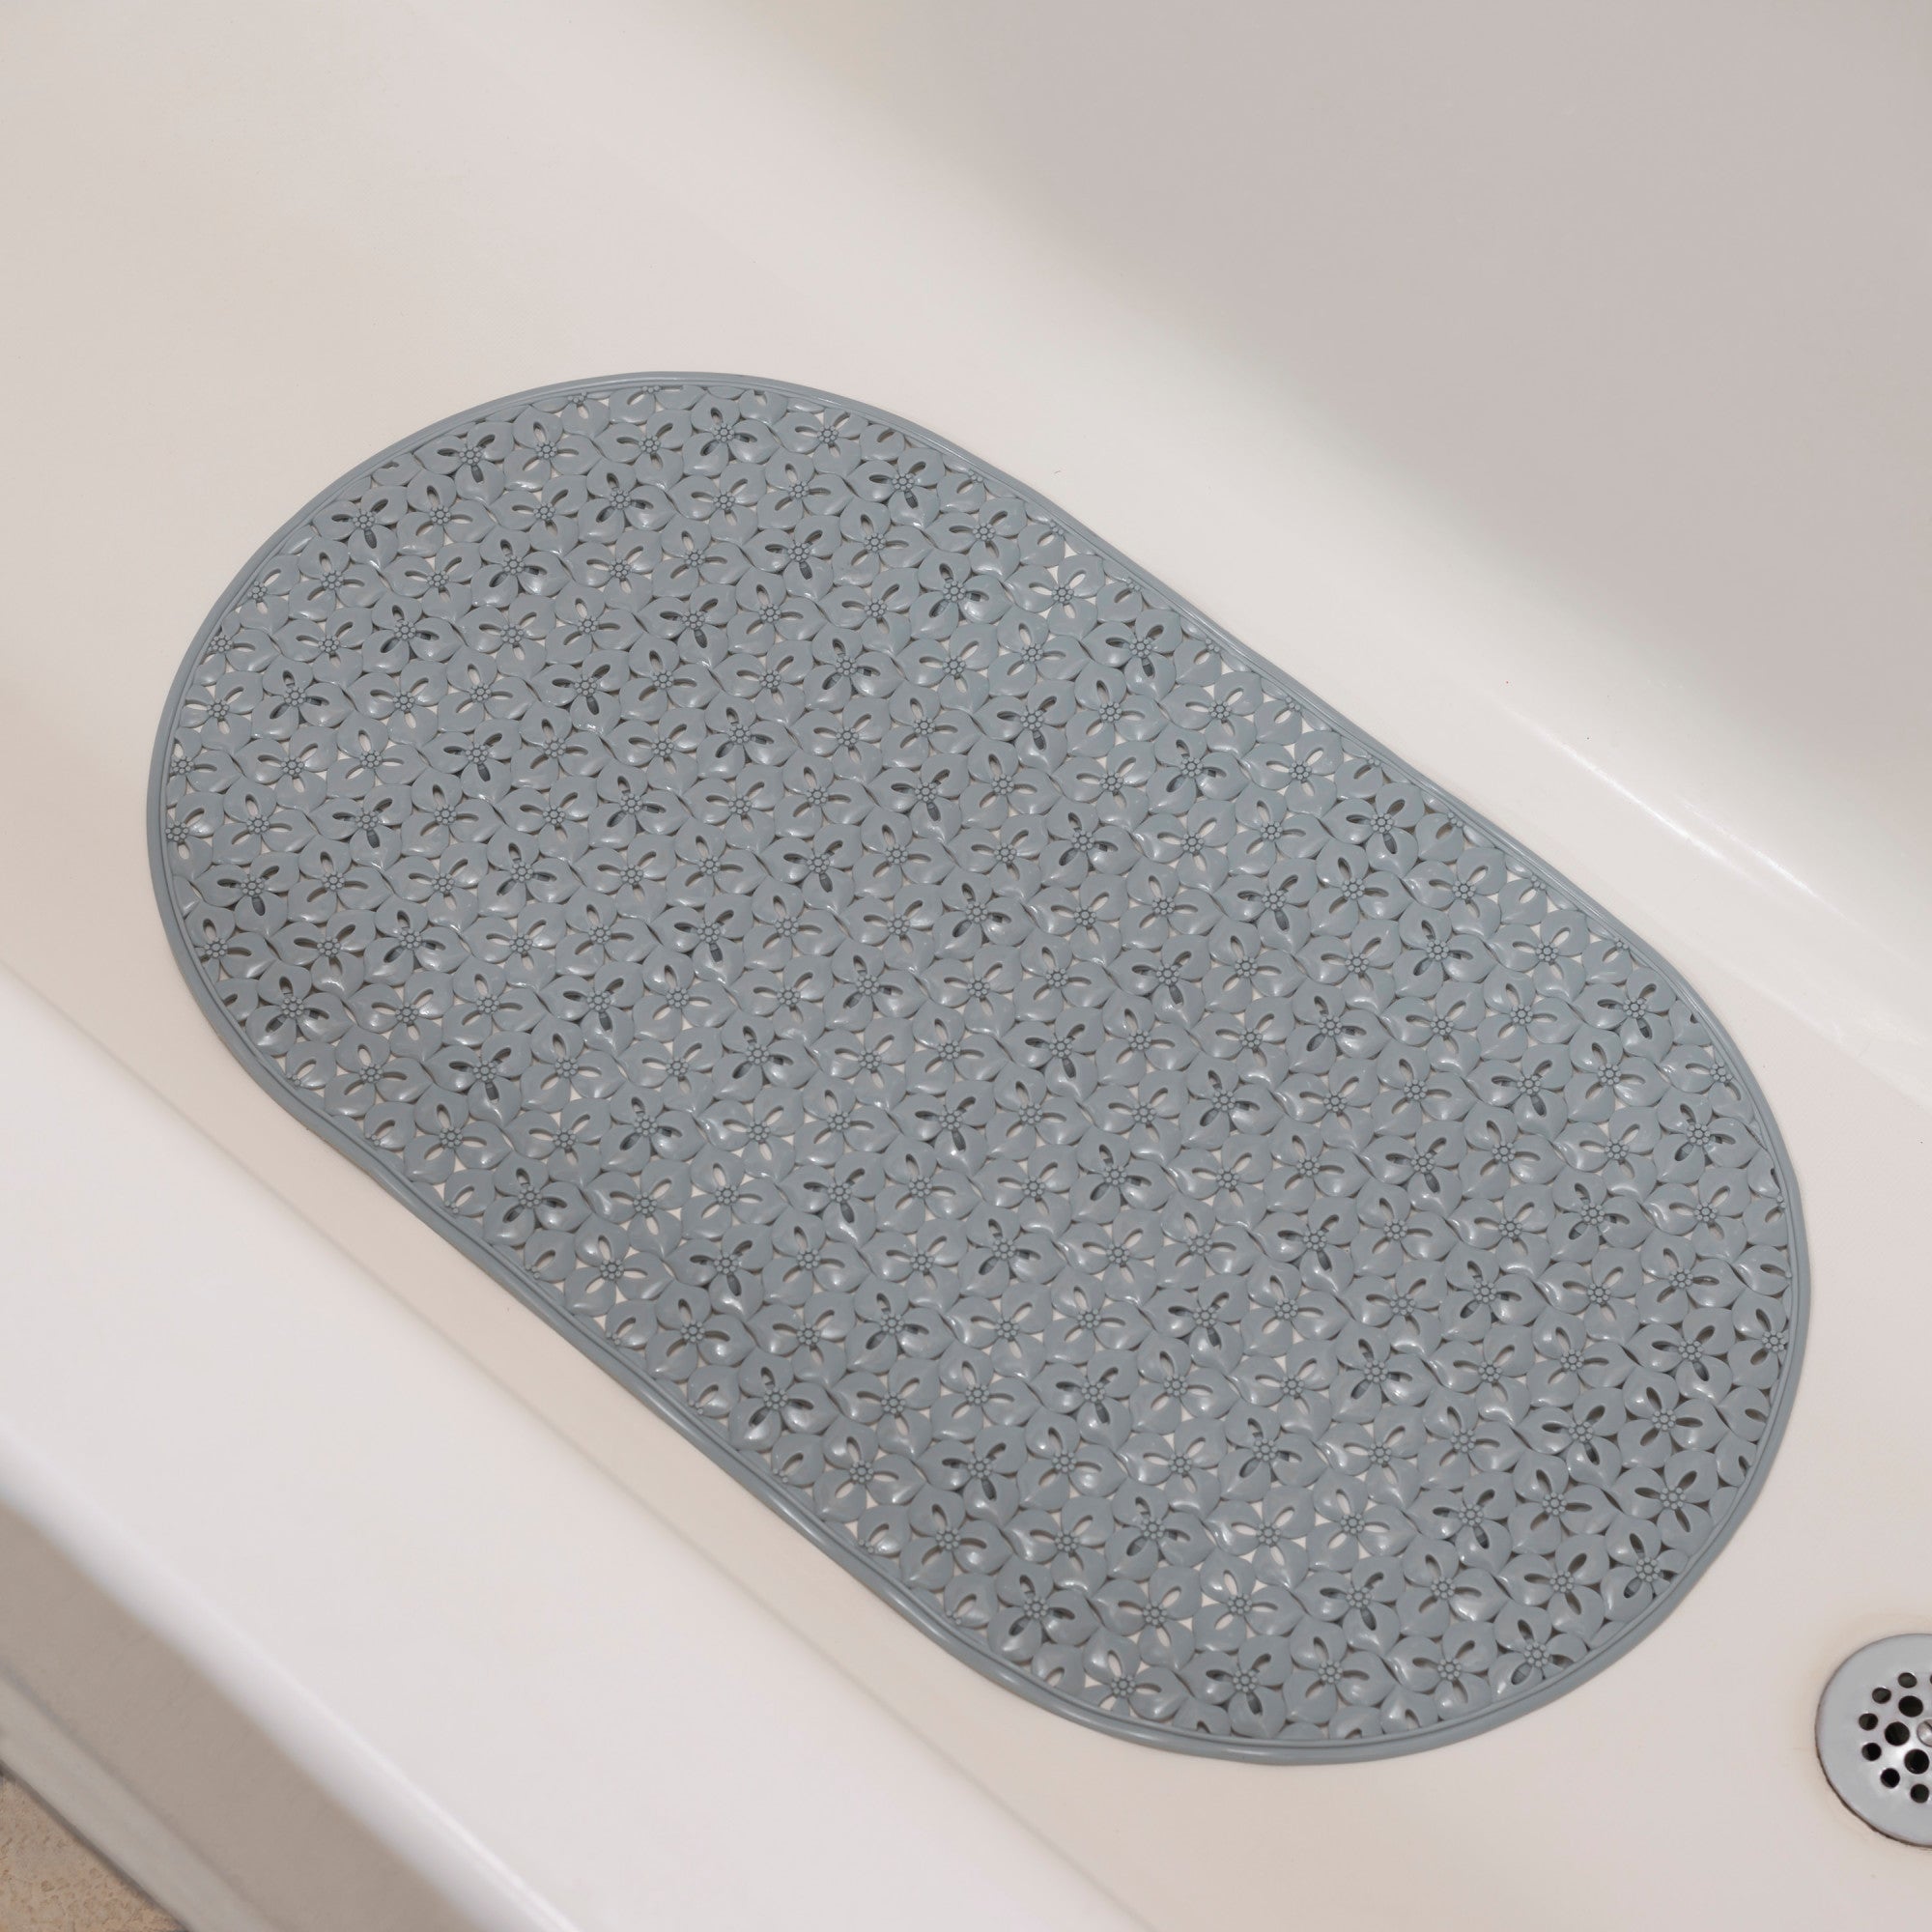 Home Basics Oval Non-Skid PVC Bath Mat, (15-inch x 15-inch), SHOWER